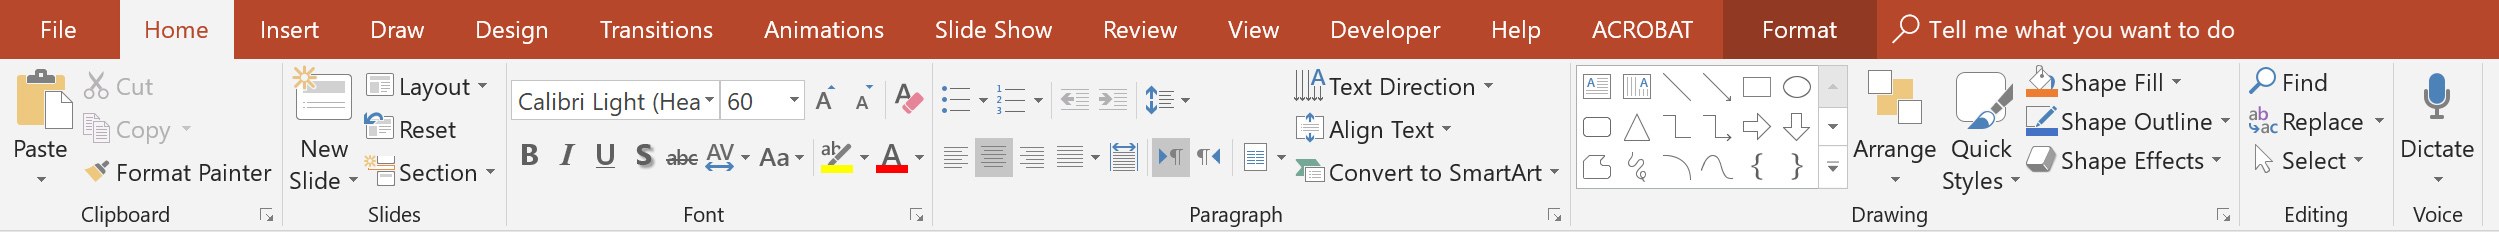 PowerPoint desktop Home tab graphic